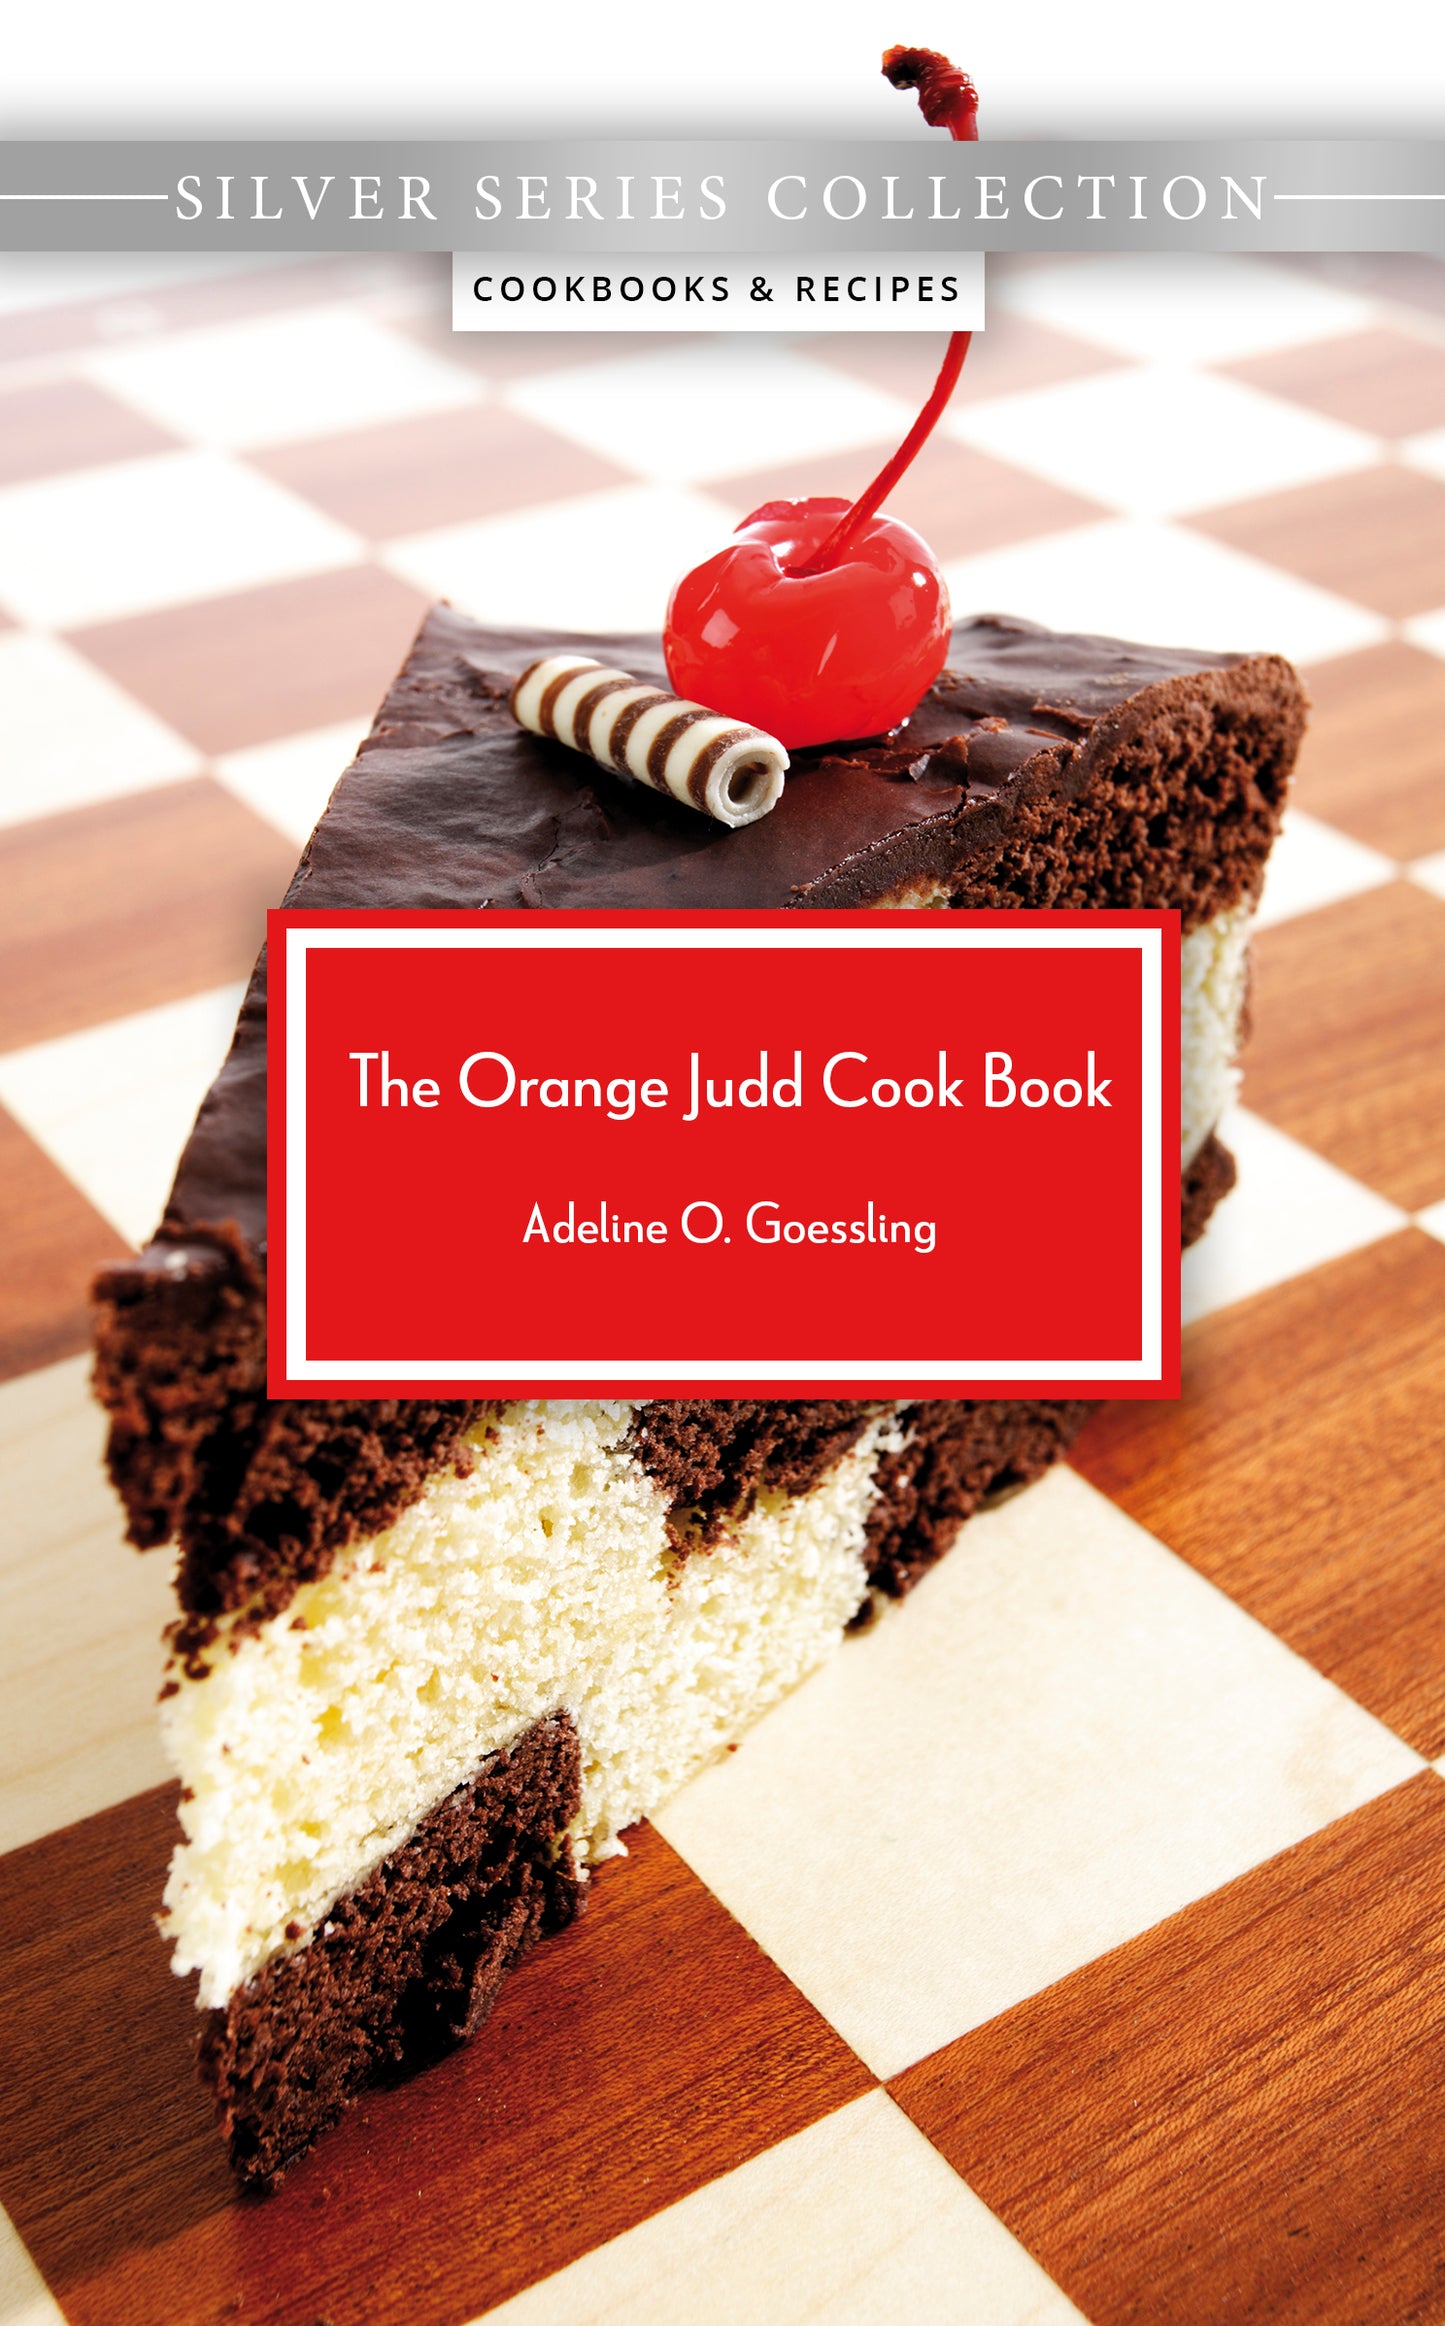 The Orange Judd Cook Book